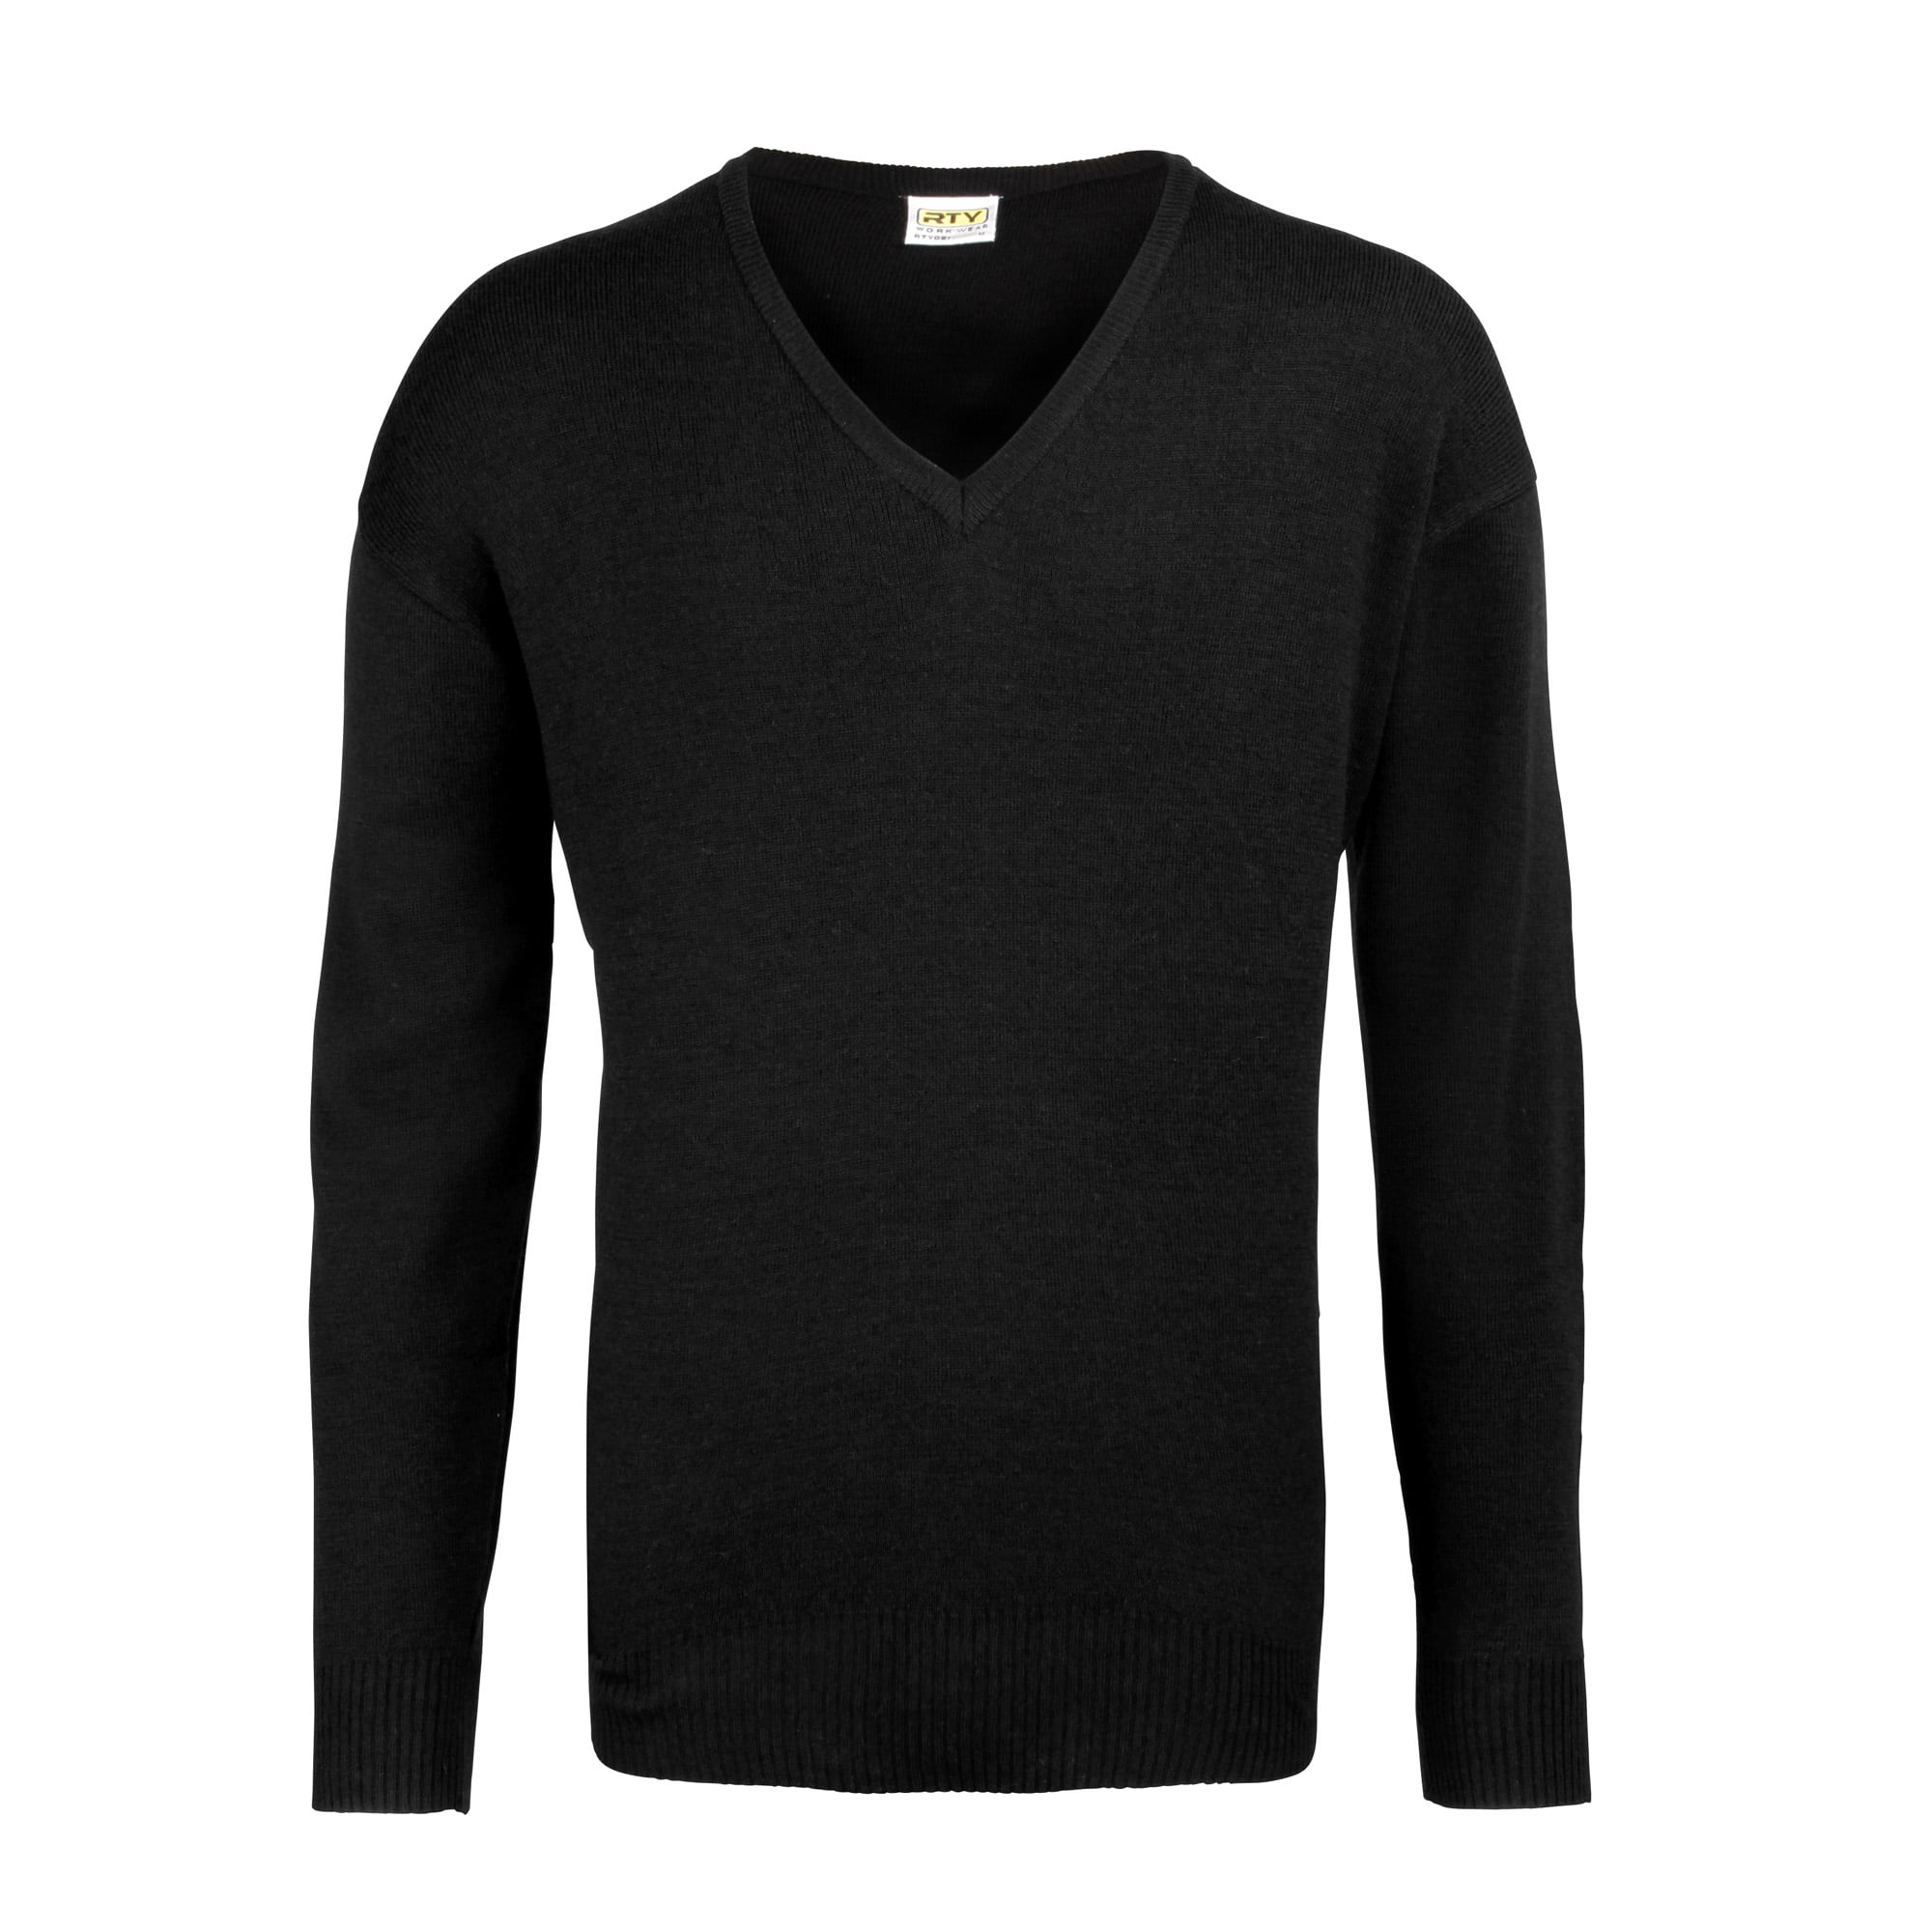 RTY Workwear Mens V-neck Arcylic Wool Sweater Sweatshirt Size S-3XL RW1330 